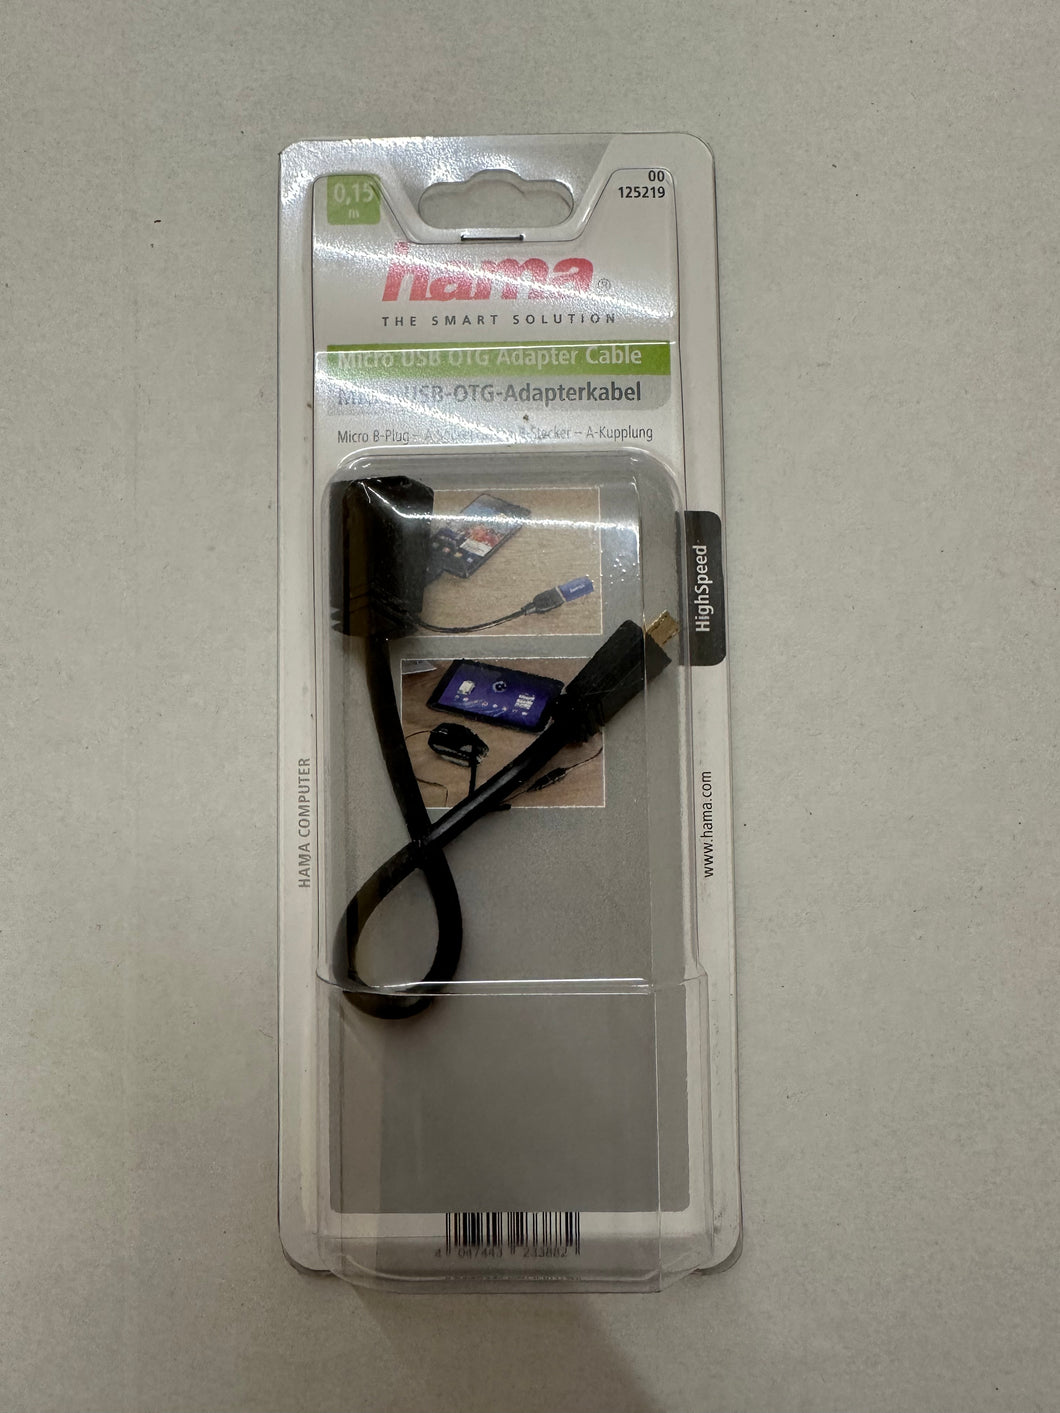 HAMA USB-2.0-OTG-Adapterkabel, Micro-Stecker - A-Kupplung, Schwarz, 0,15 m (00125219)